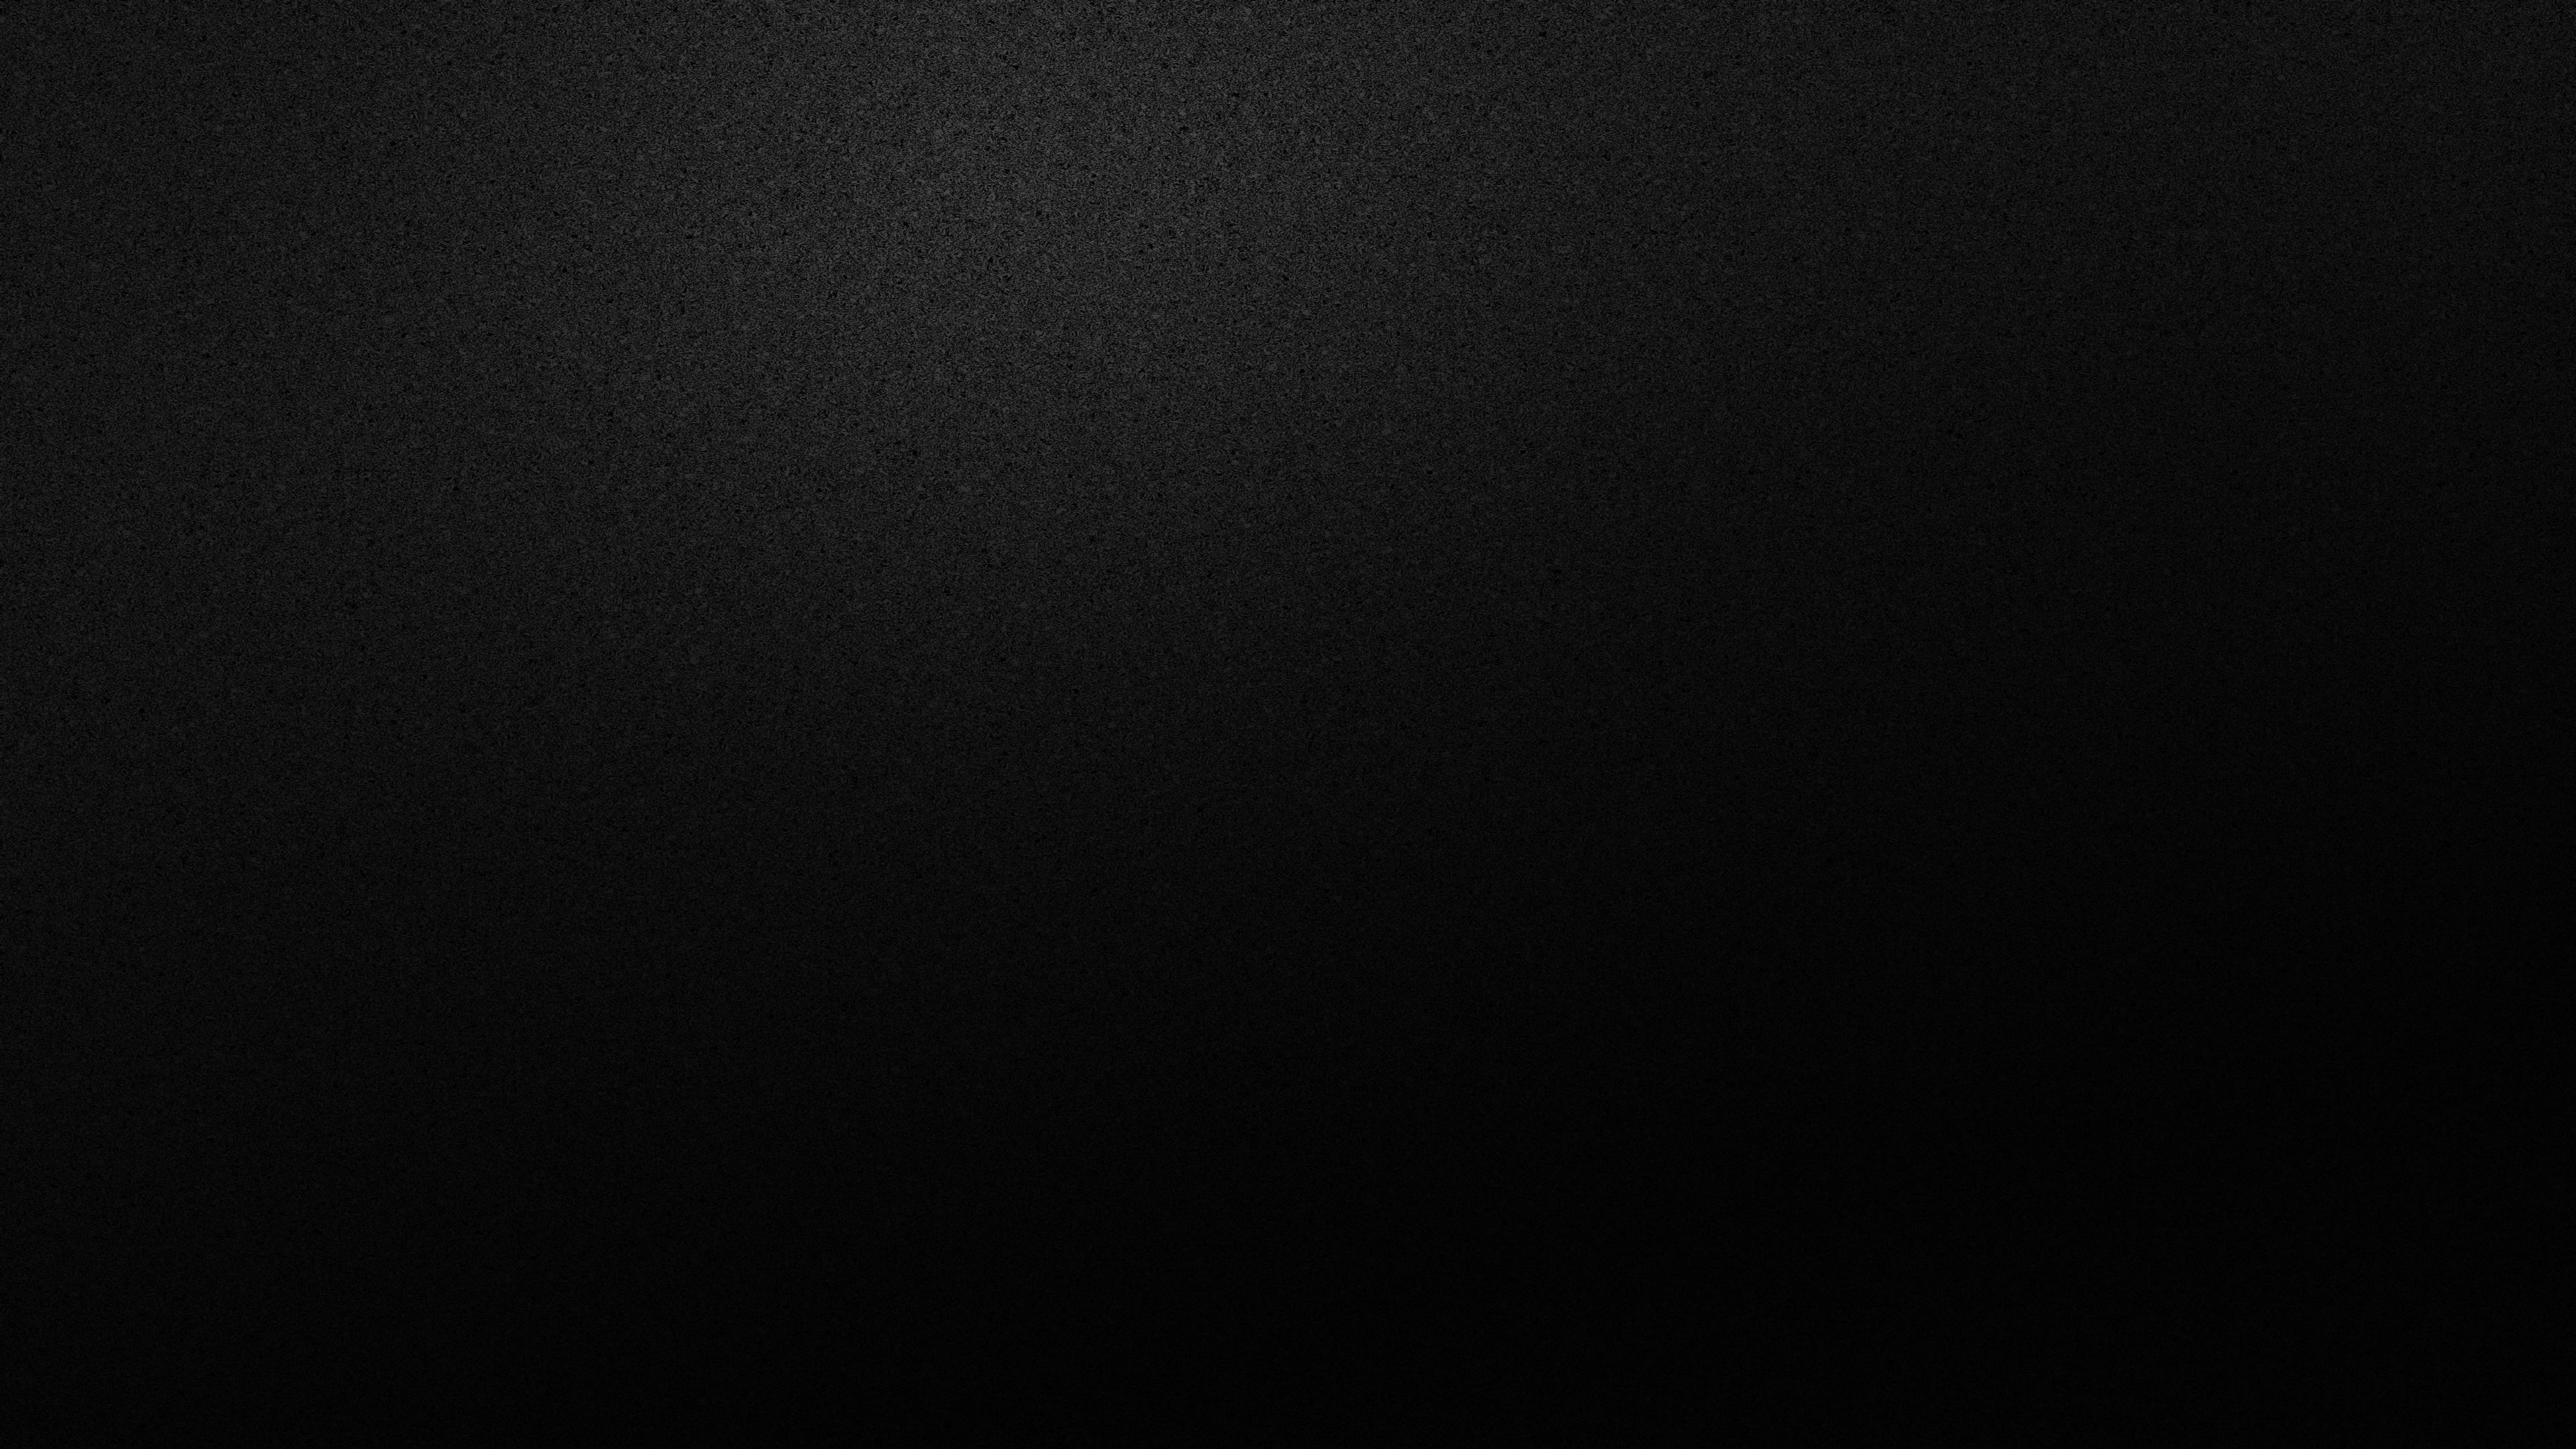 black_texture_background_wallpaper__hd__by_deddyrap-dc95rkv.jpg 3,840×